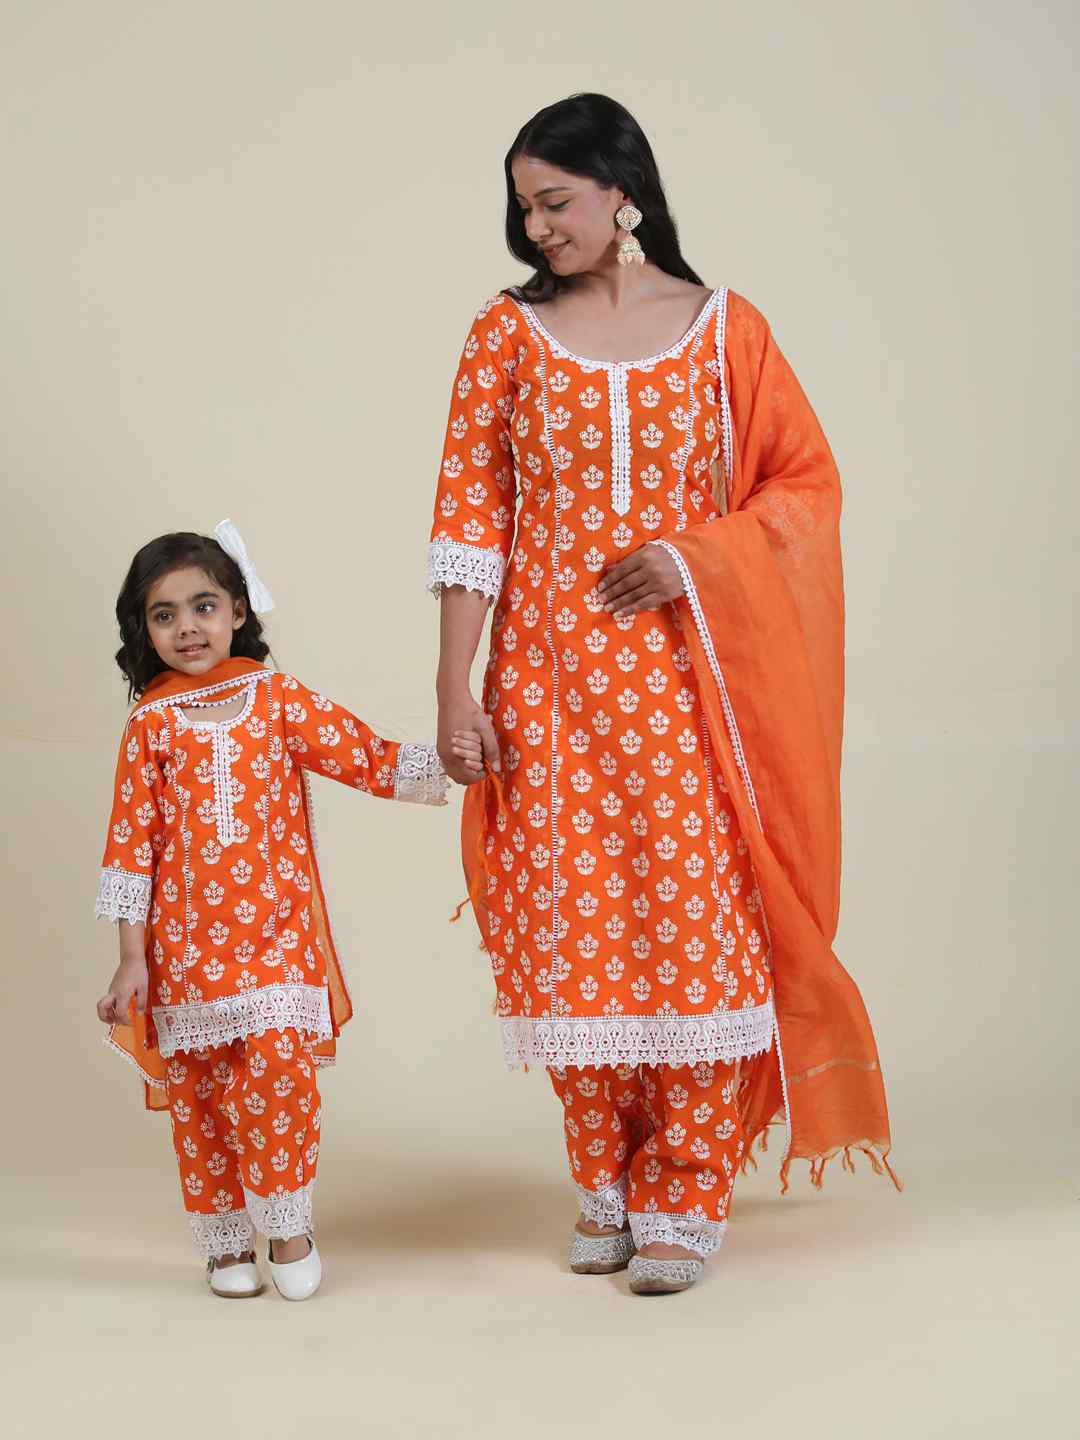 Cotton Orange Kurta set with chanderi dupatta With lace work all over